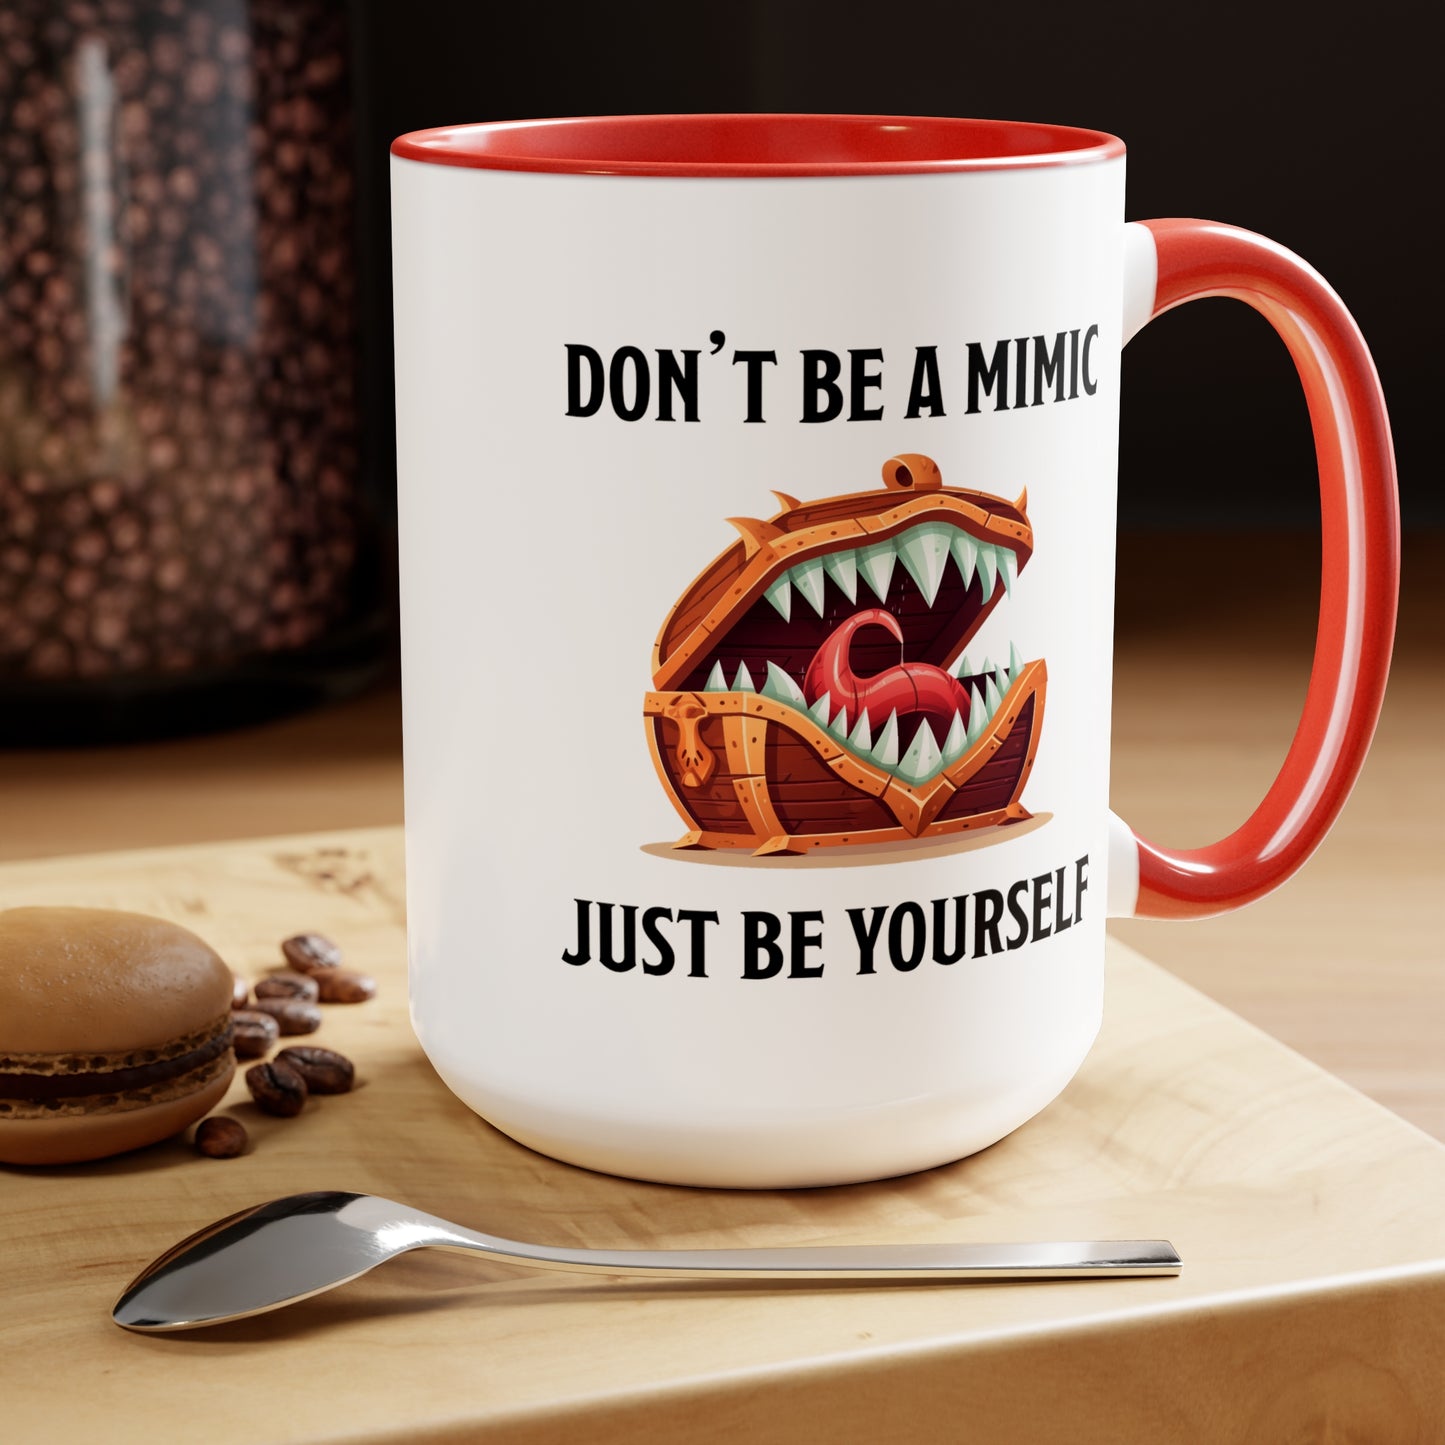 Don't Be A Mimic, Just Be Yourself Ceramic Mug 15oz, DnD Mug